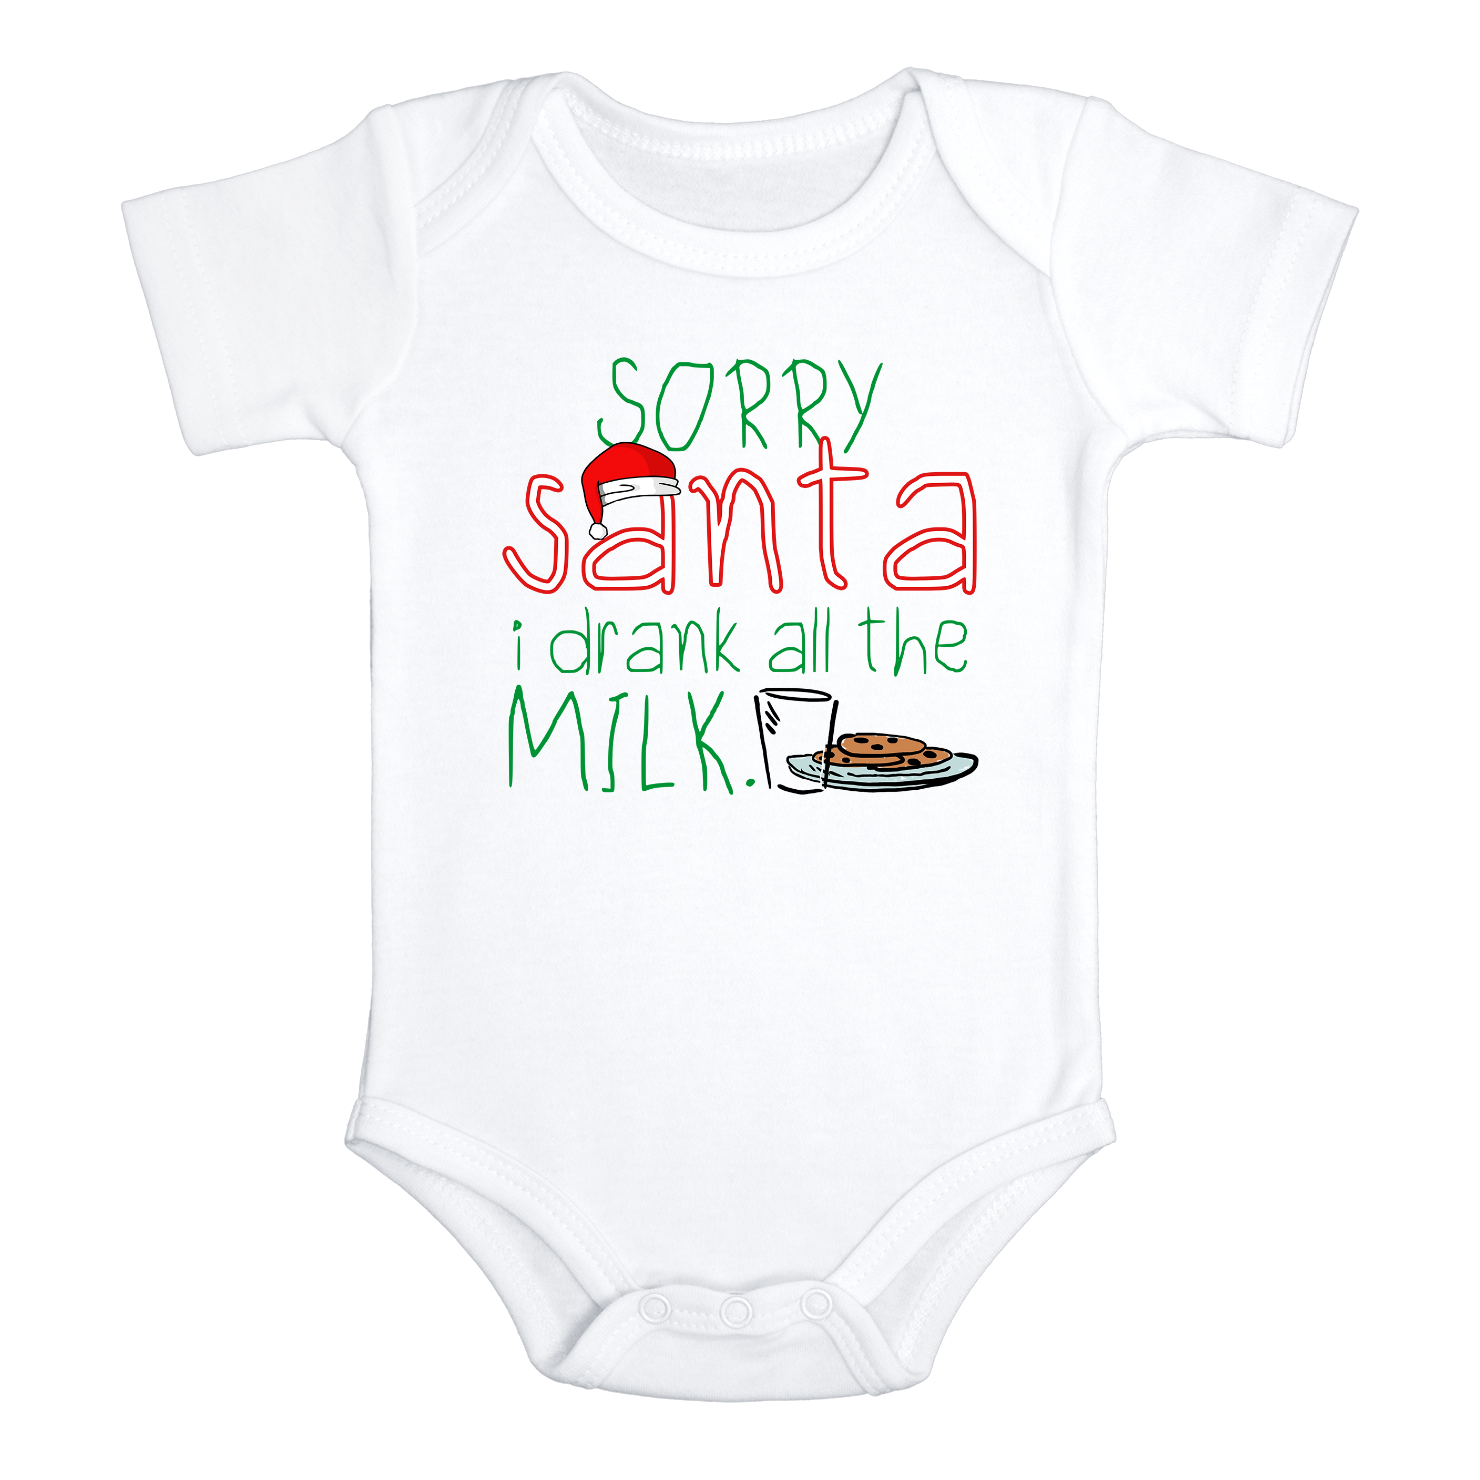 SORRY SANTA I DRANK ALL THE MILK Funny baby Christmas onesies bodysuit (white: short or long sleeve)